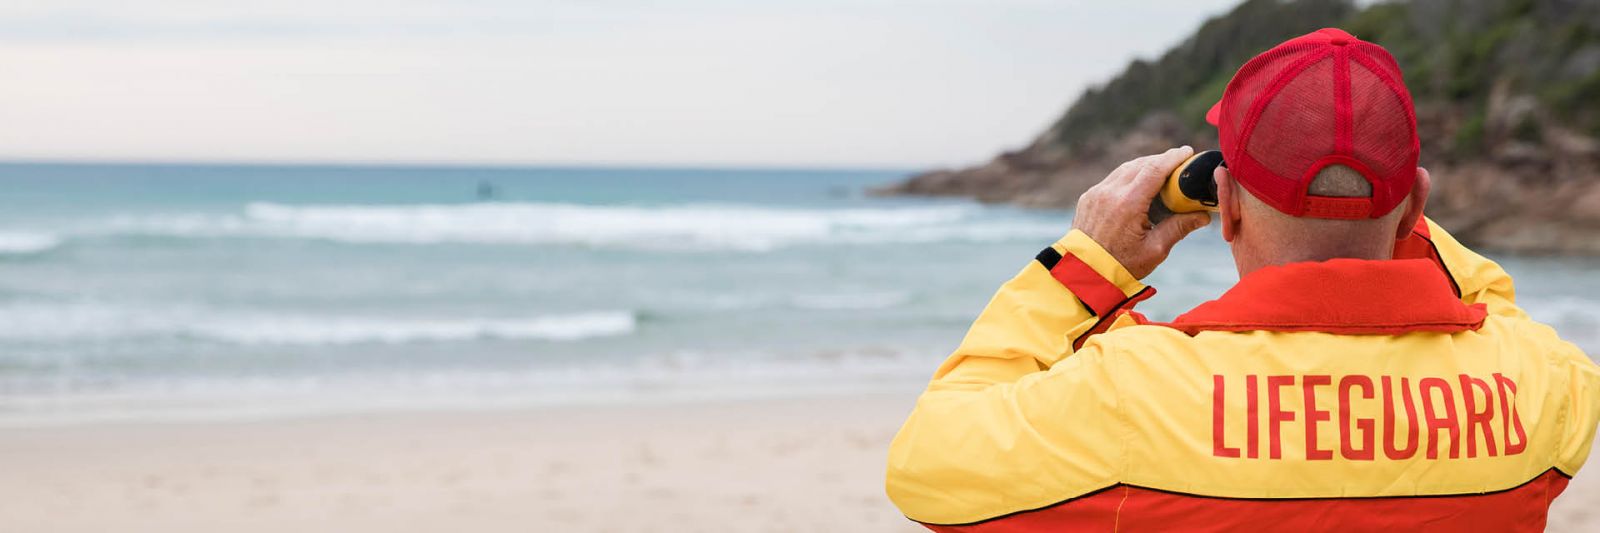 Surf lifesavings clubs | Port Stephens Council